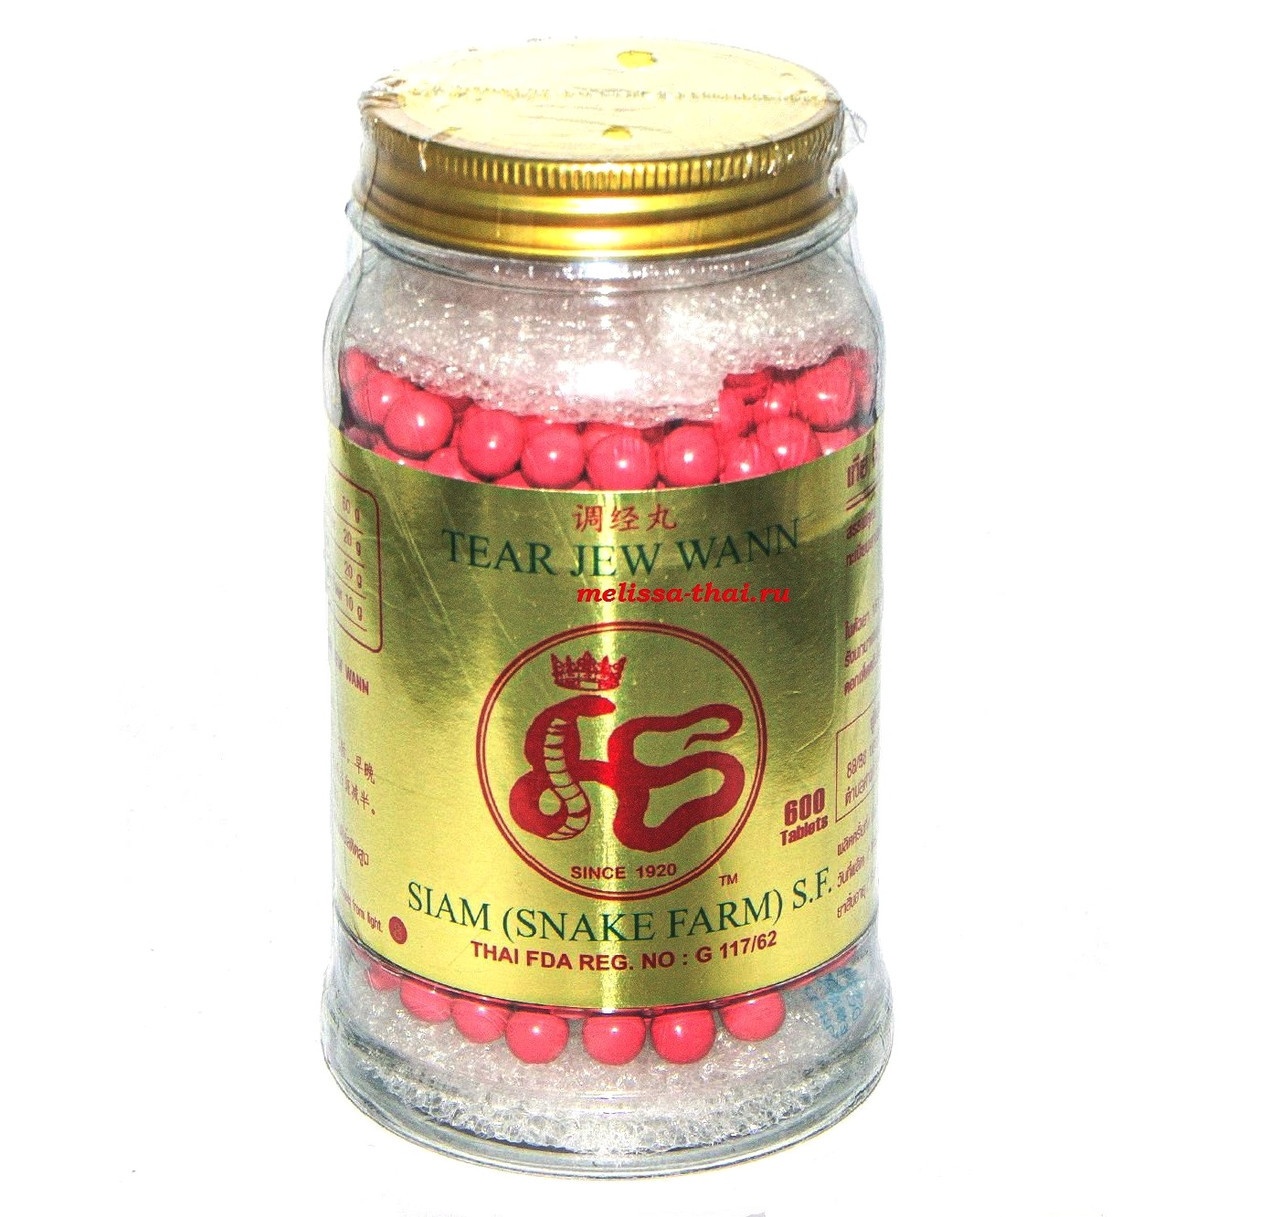 Змеиный препарат Tear Jew Wann, для лечения женских болезней, 600 капсул производство Таиланд